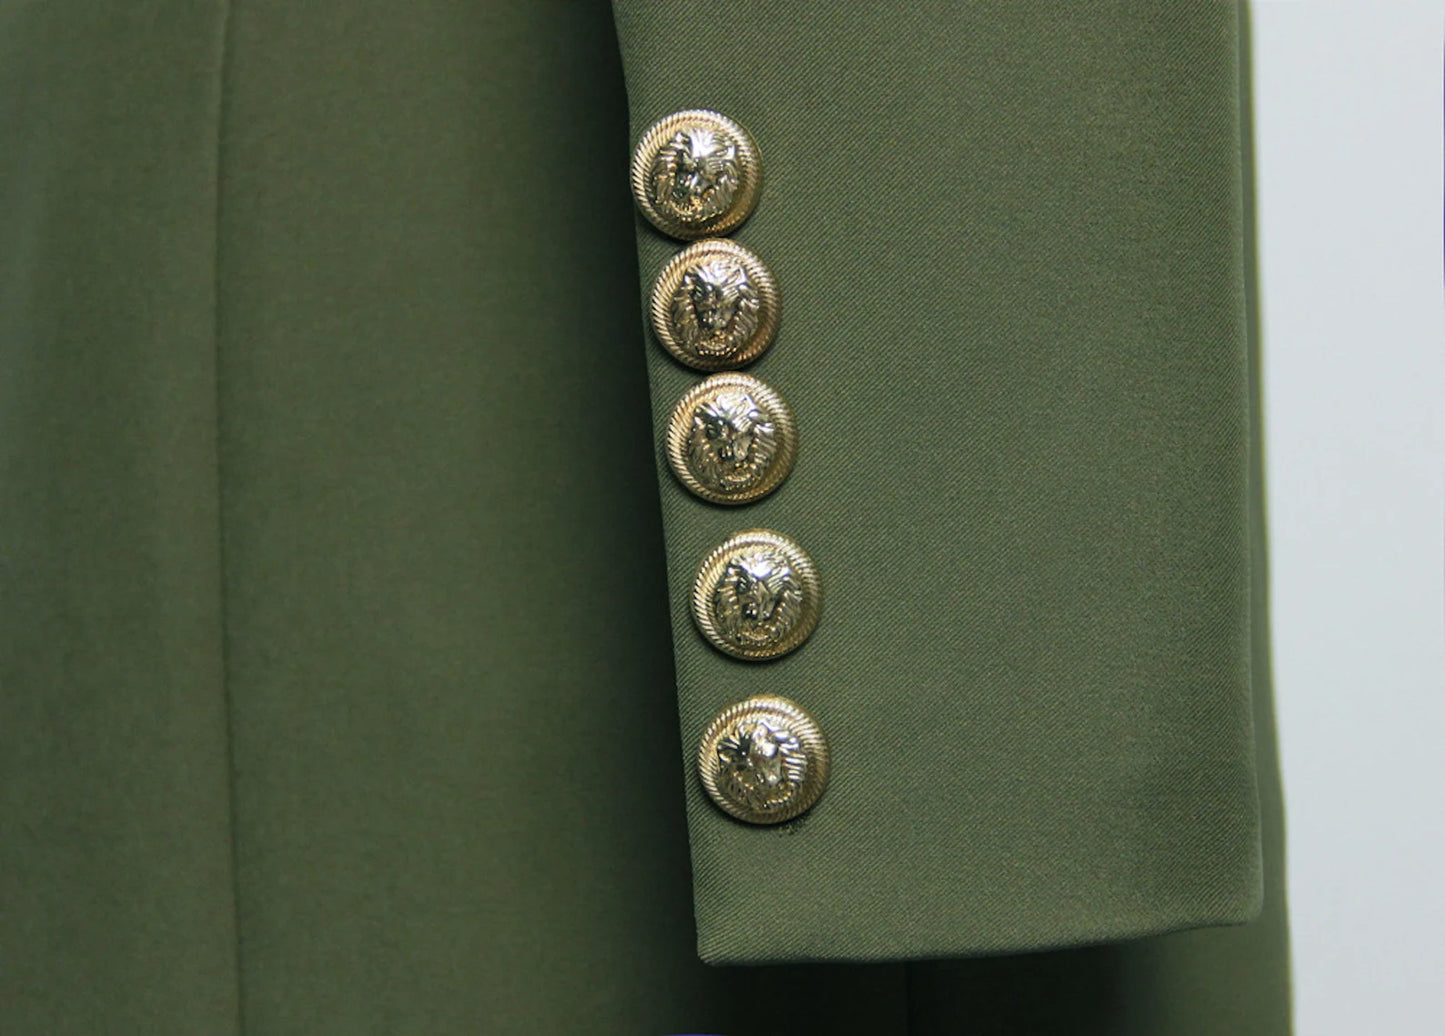 Women's Belted Long Blazer/ Mini Short Dress Green Navy